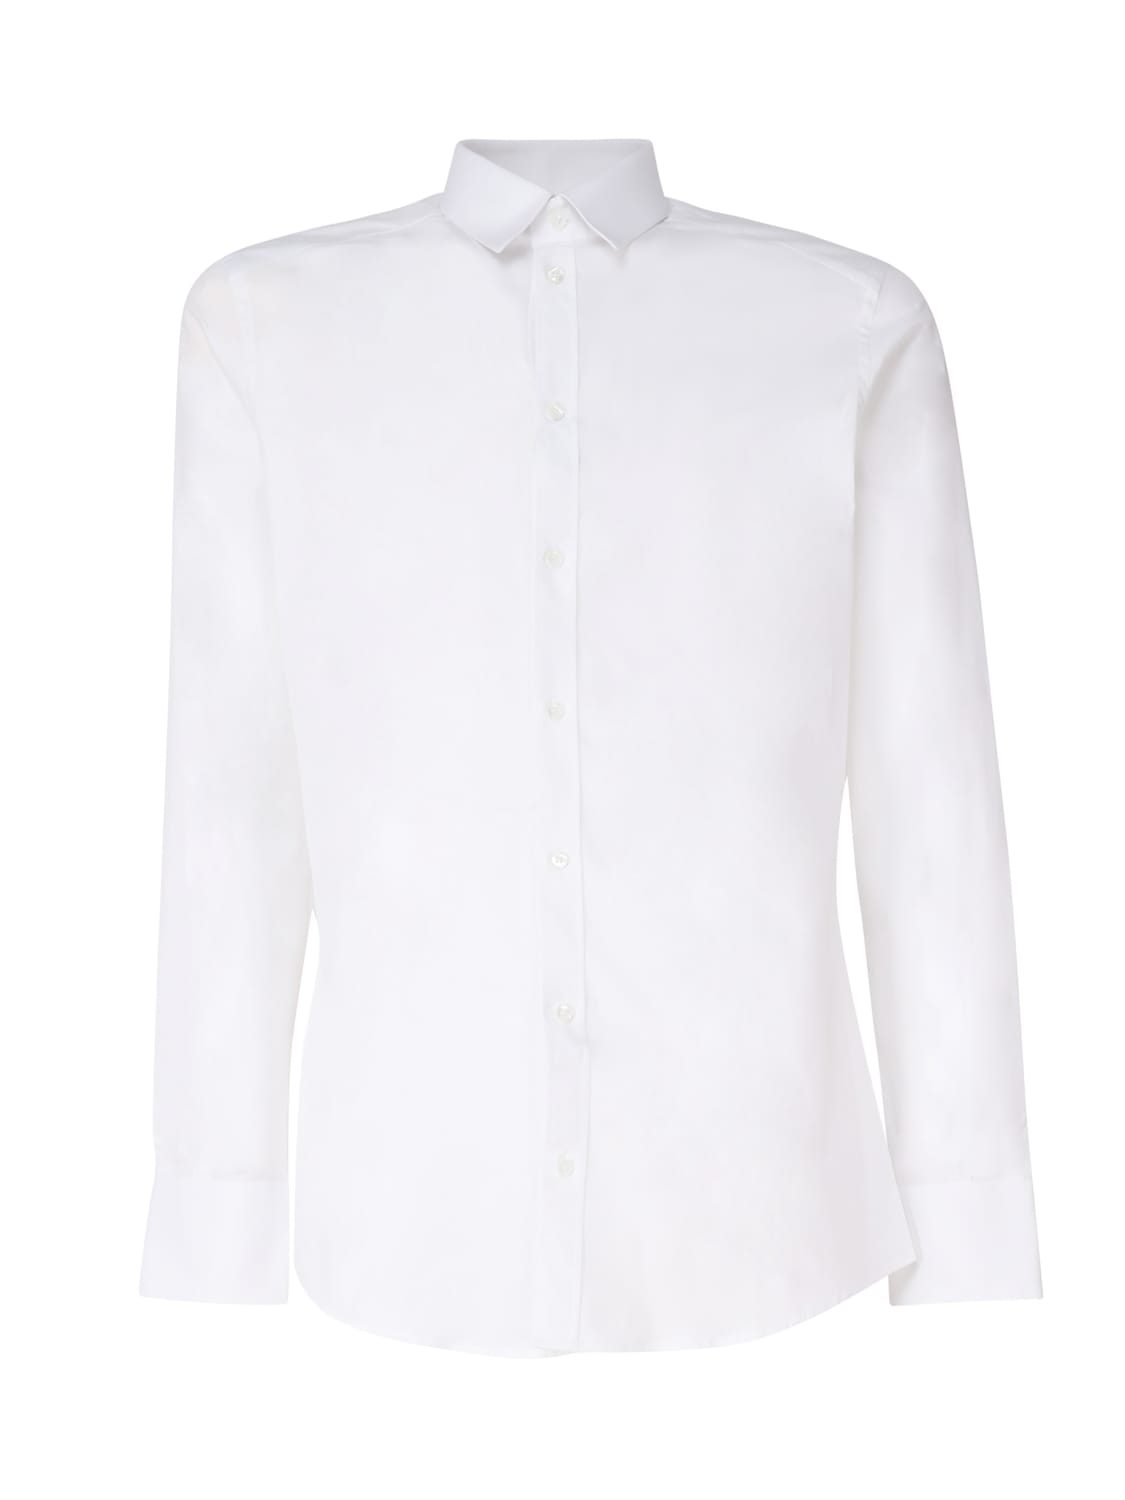 Dolce & Gabbana Shirt Made Of Stretch Cotton Poplin In White